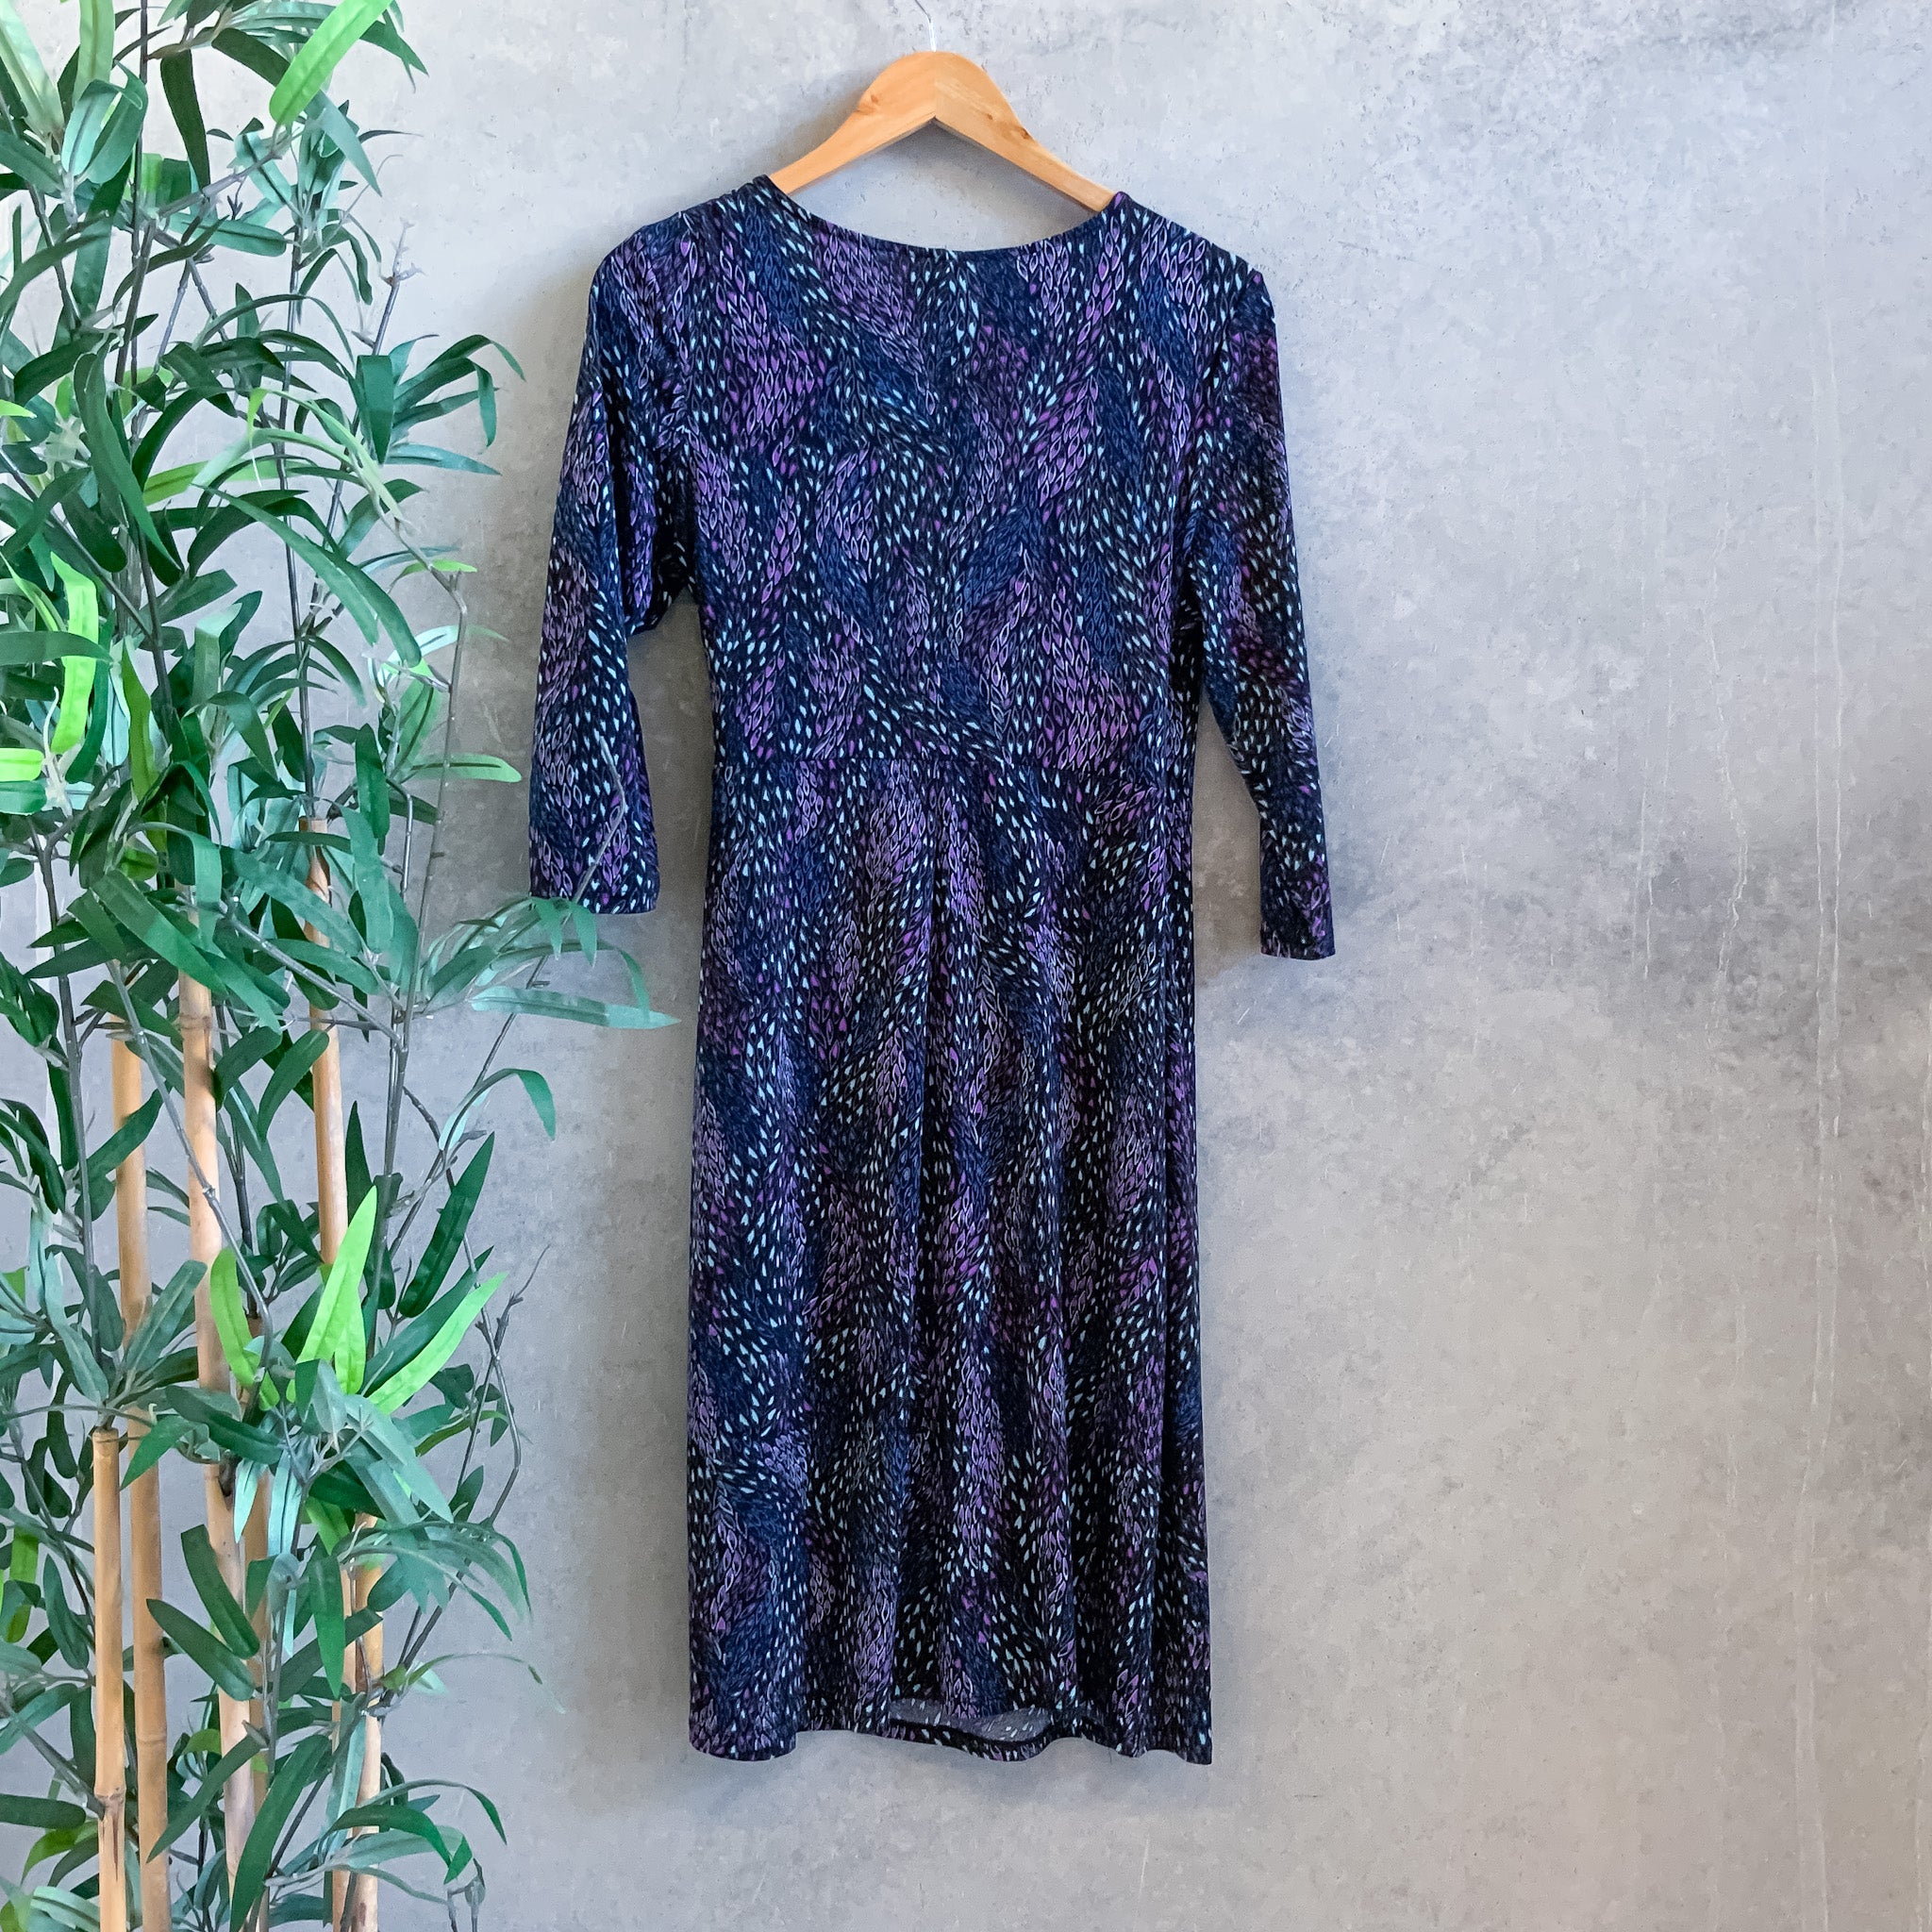 LEONA EDMISTON 3/4 Sleeve abstract Print Twist Detail Knee Length Dress - Size 12